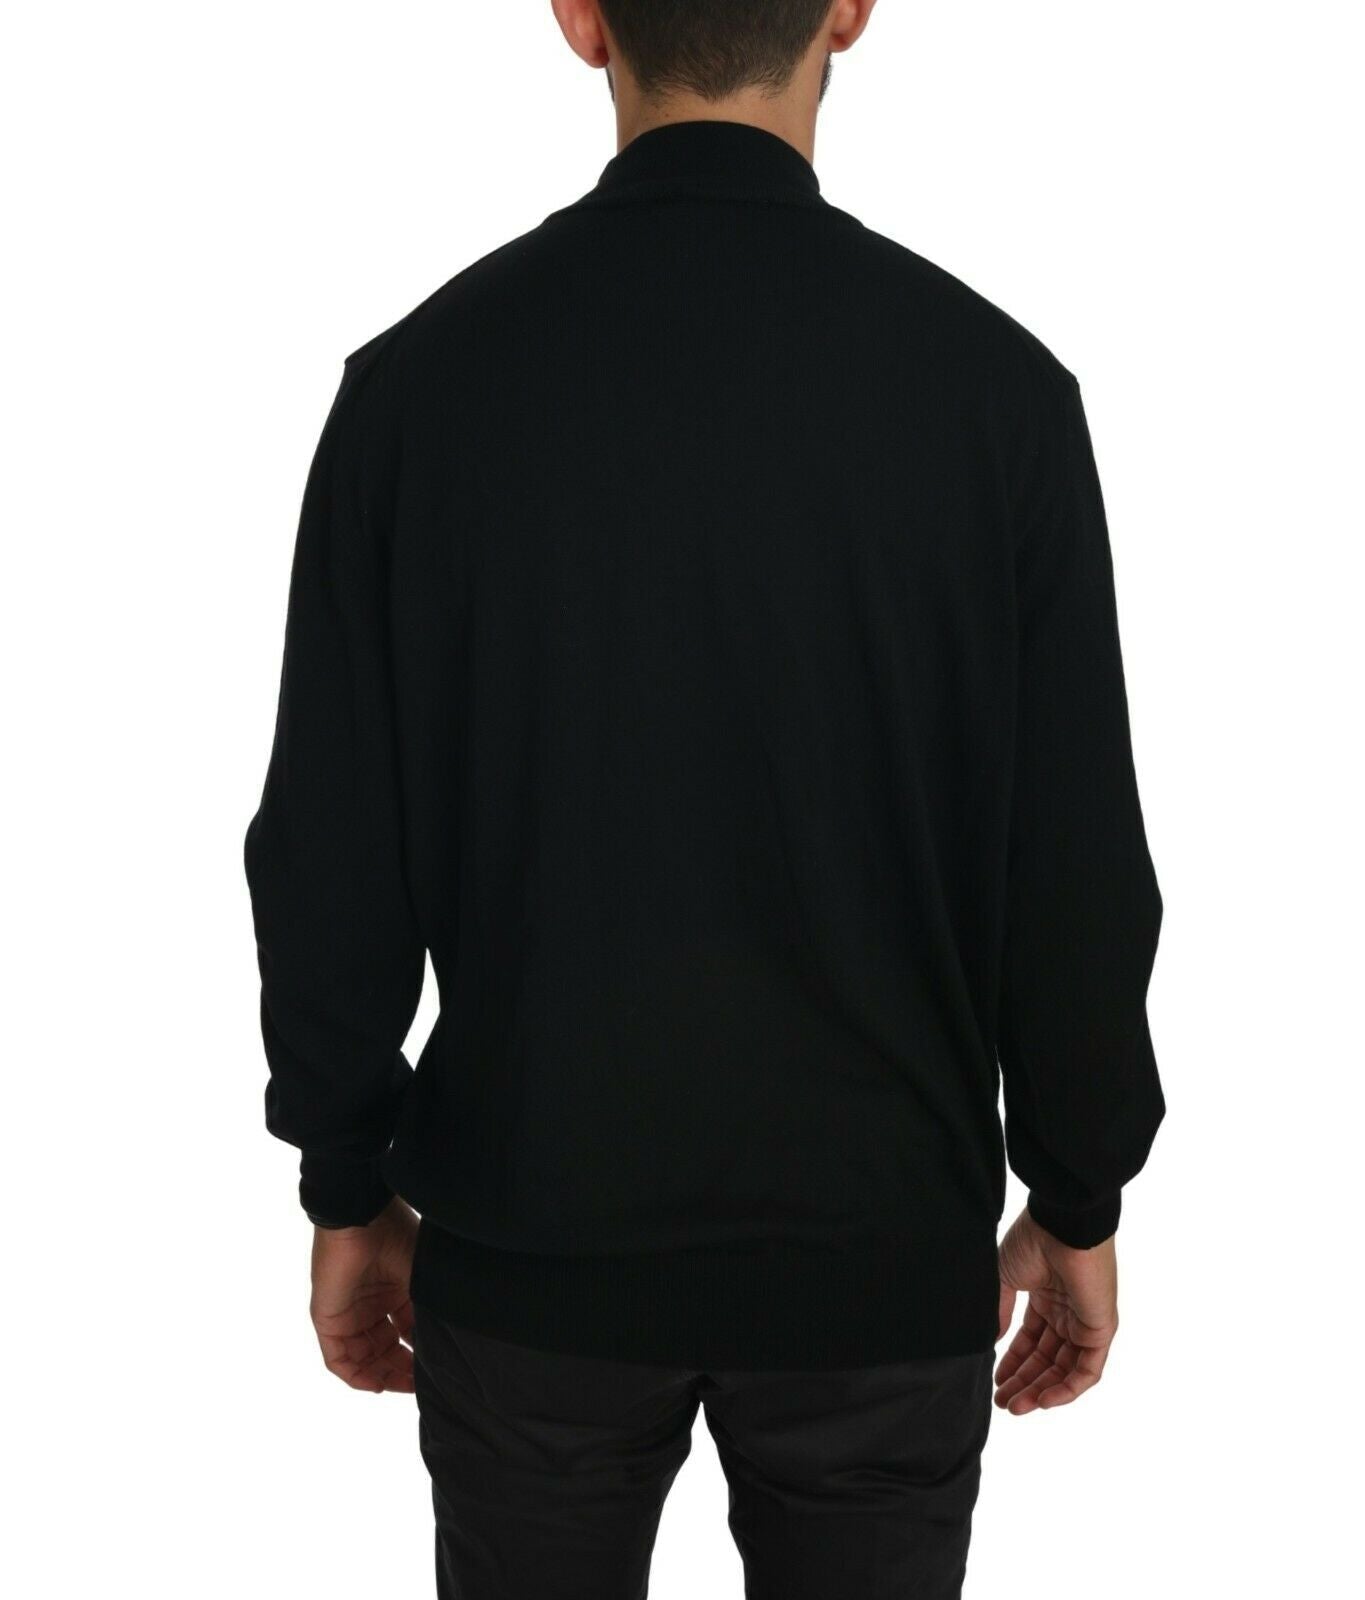 MILA SCHÖN Black Turtle Neck Pullover Top Virgin Wool Sweater - Fizigo